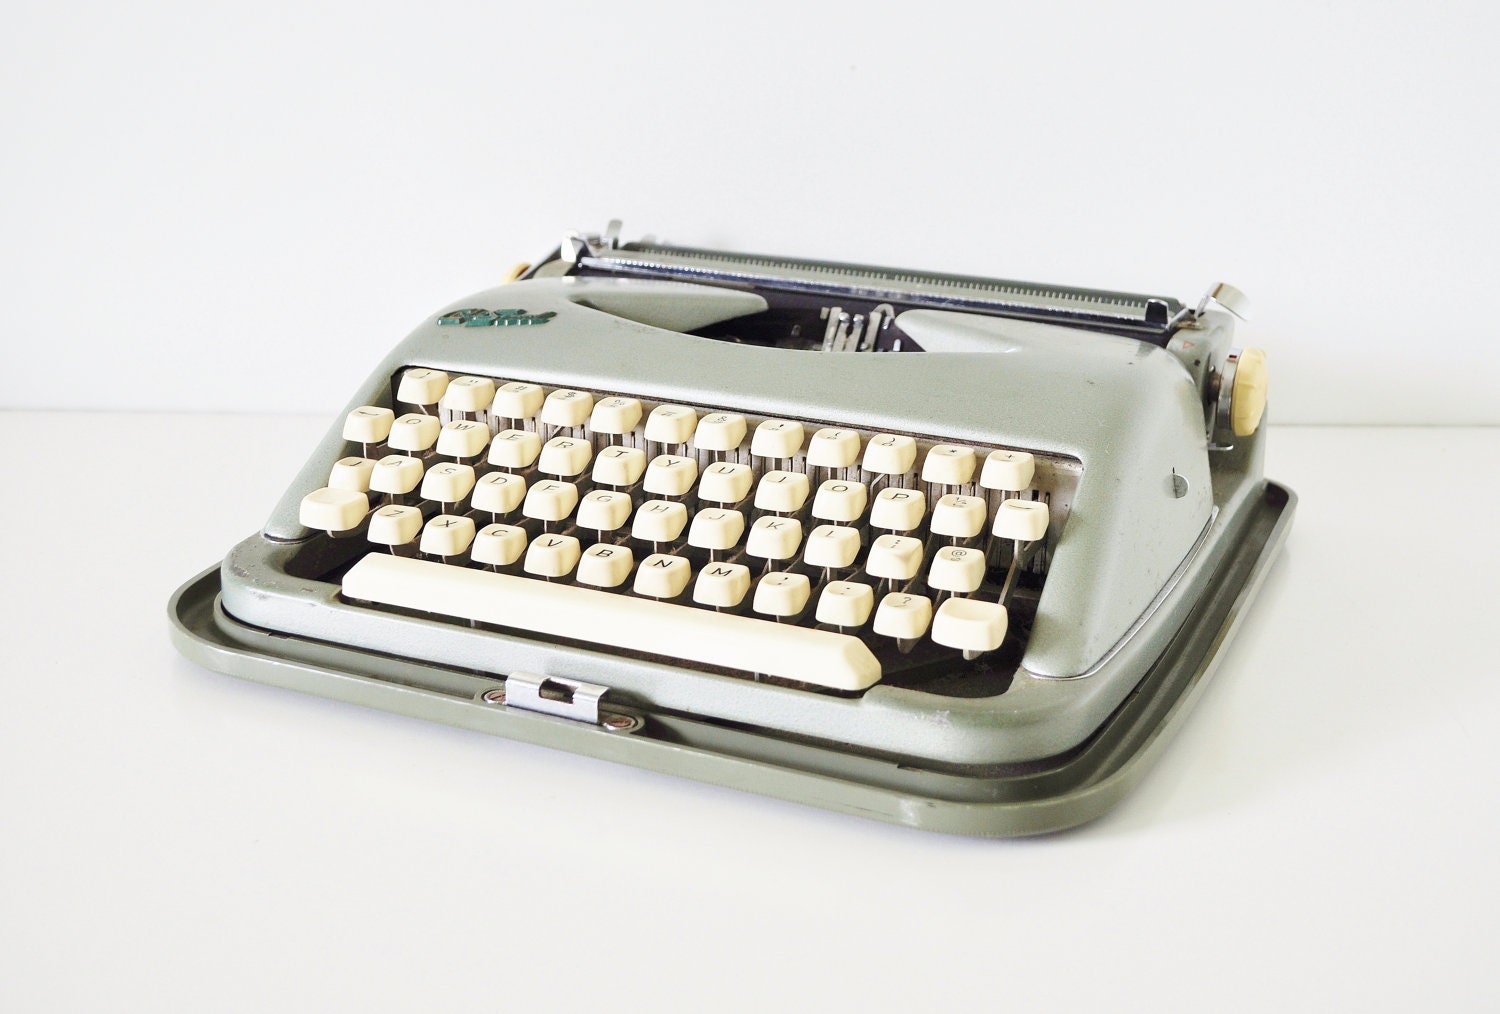 Vintage Typewriter - Green Cole Steel Portable Typewriter - thewhitepepper